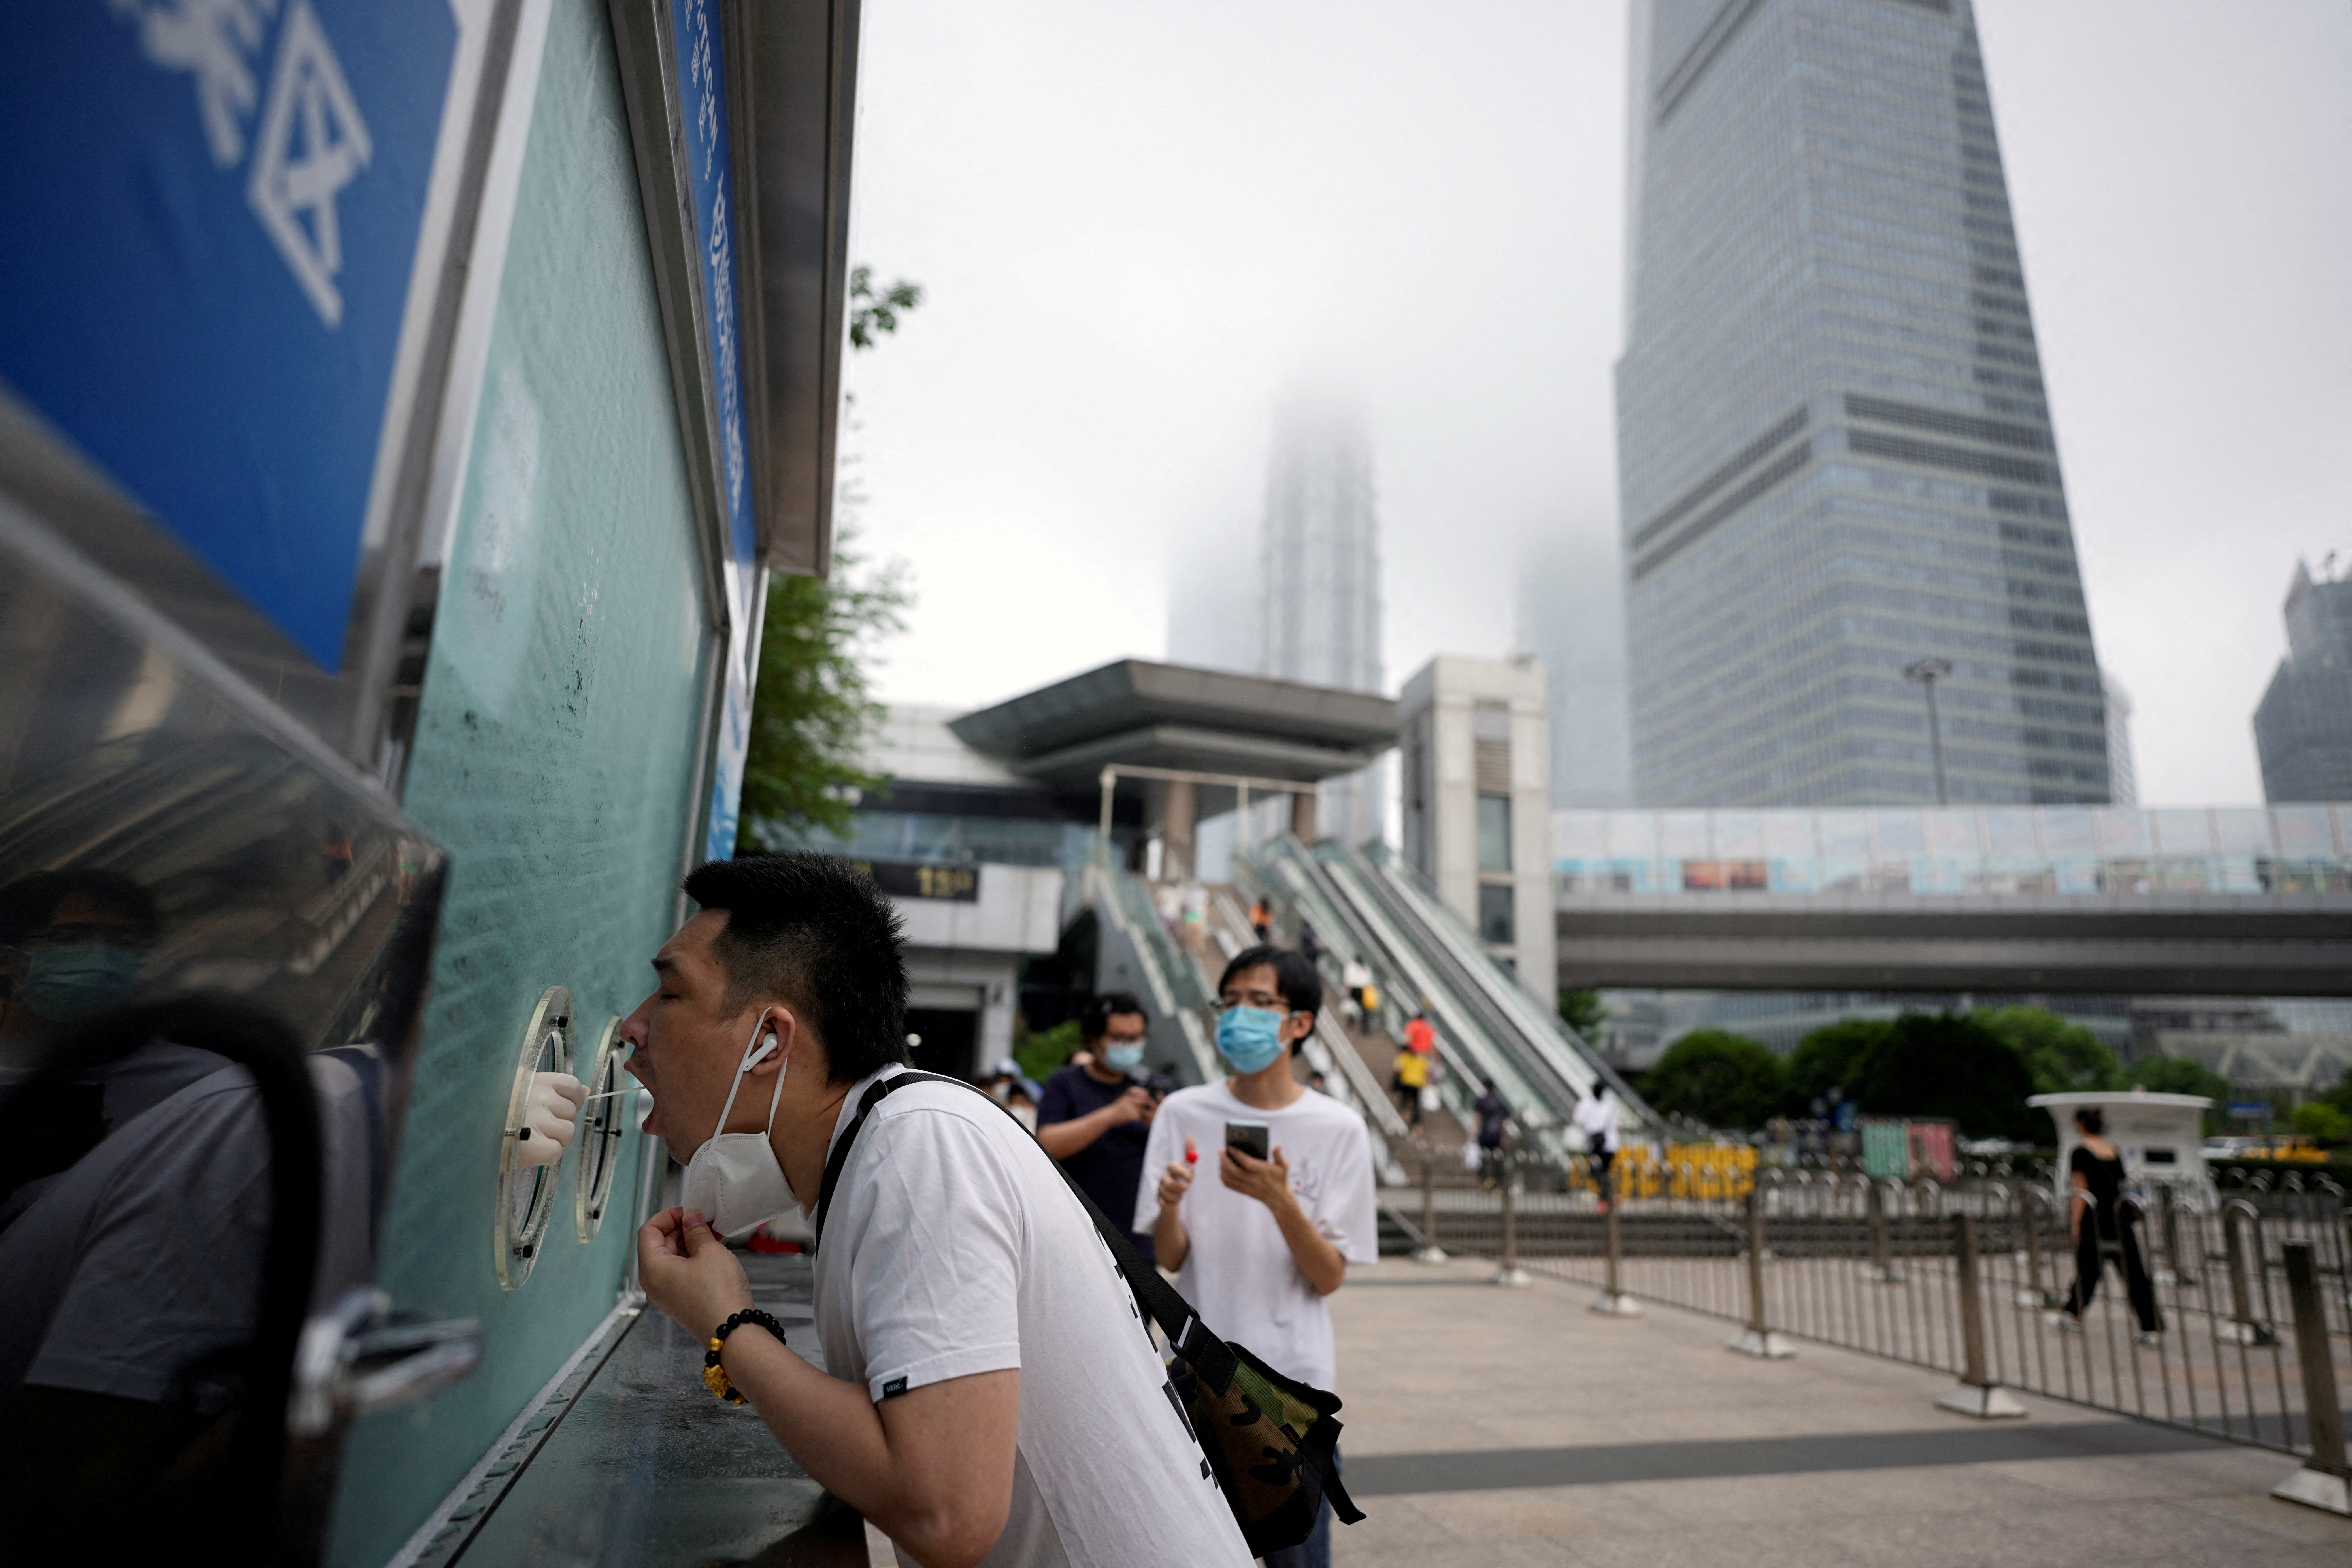 COVID-19 lockdown lifted in Shanghai